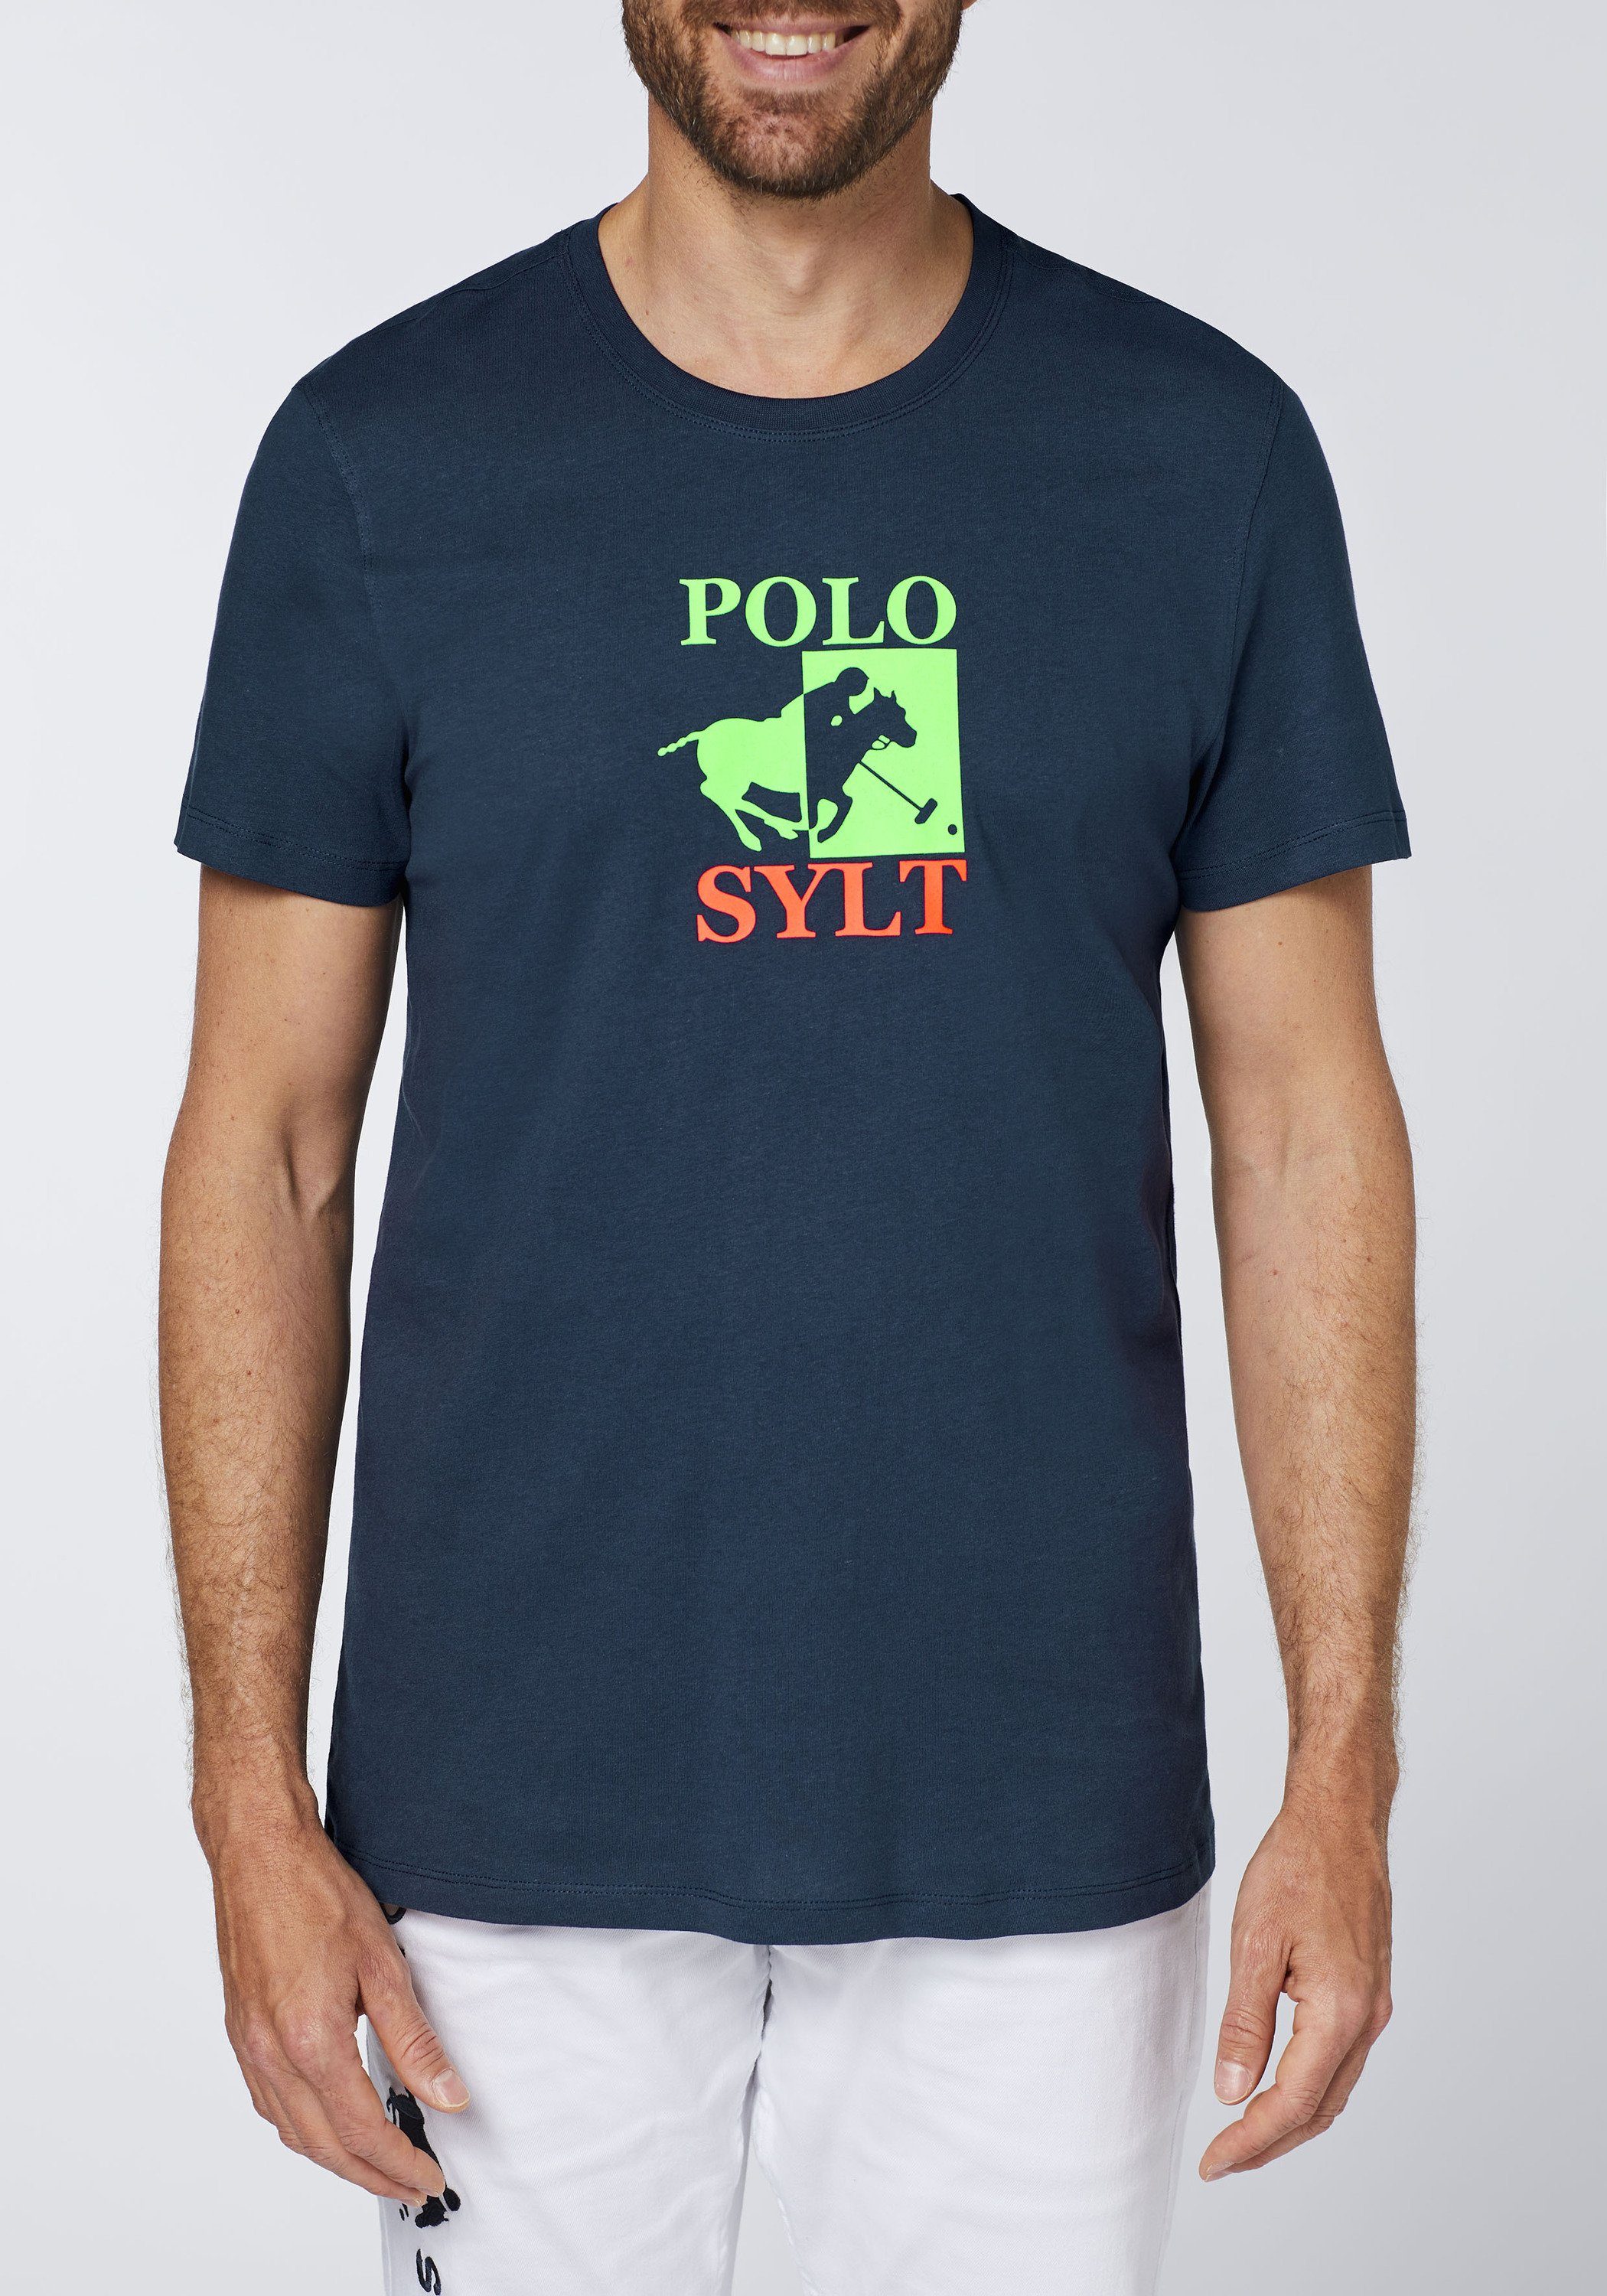 Print-Shirt 19-4010 großem Polo mit Total Logoprint Sylt Eclipse